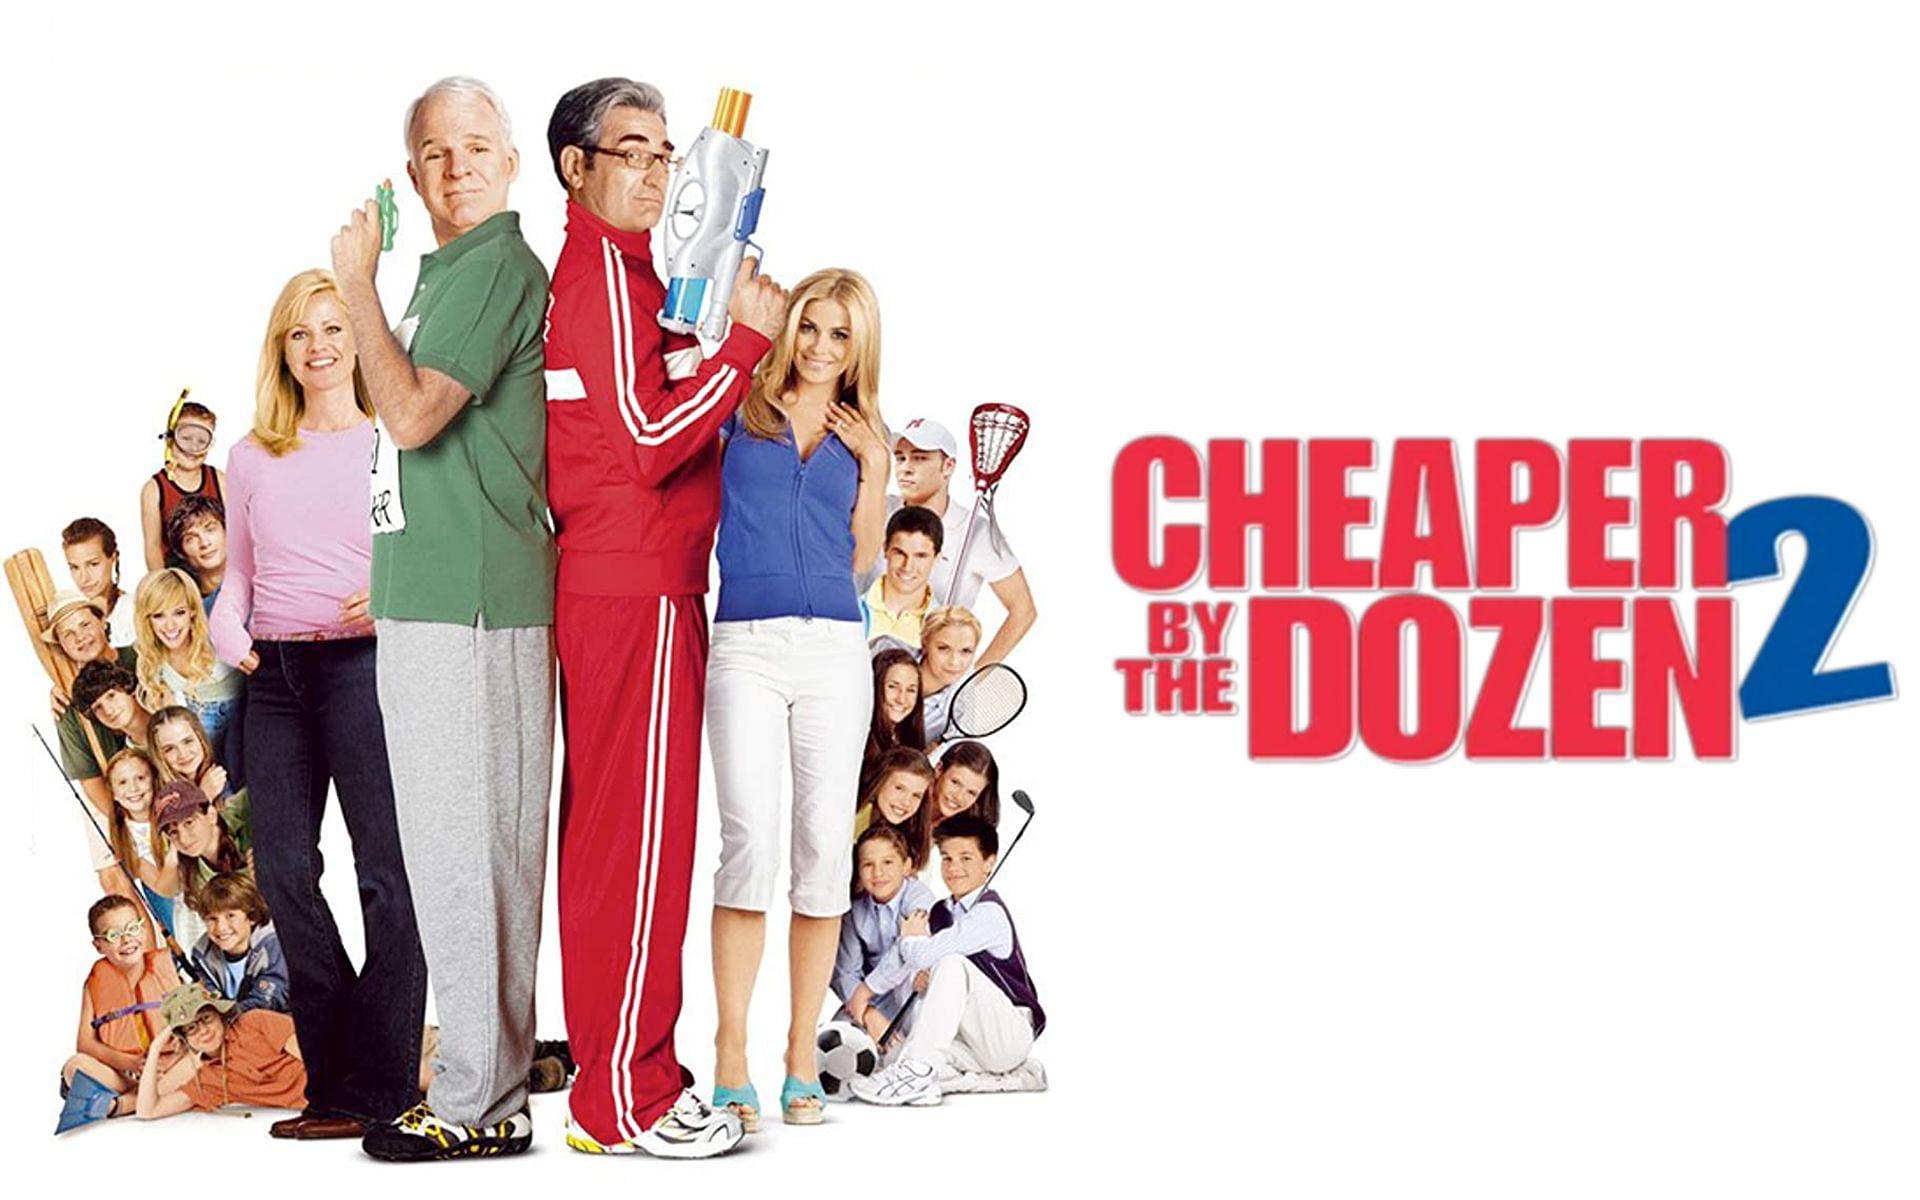 Cheaper by the Dozen poster (Image via Hotstar)